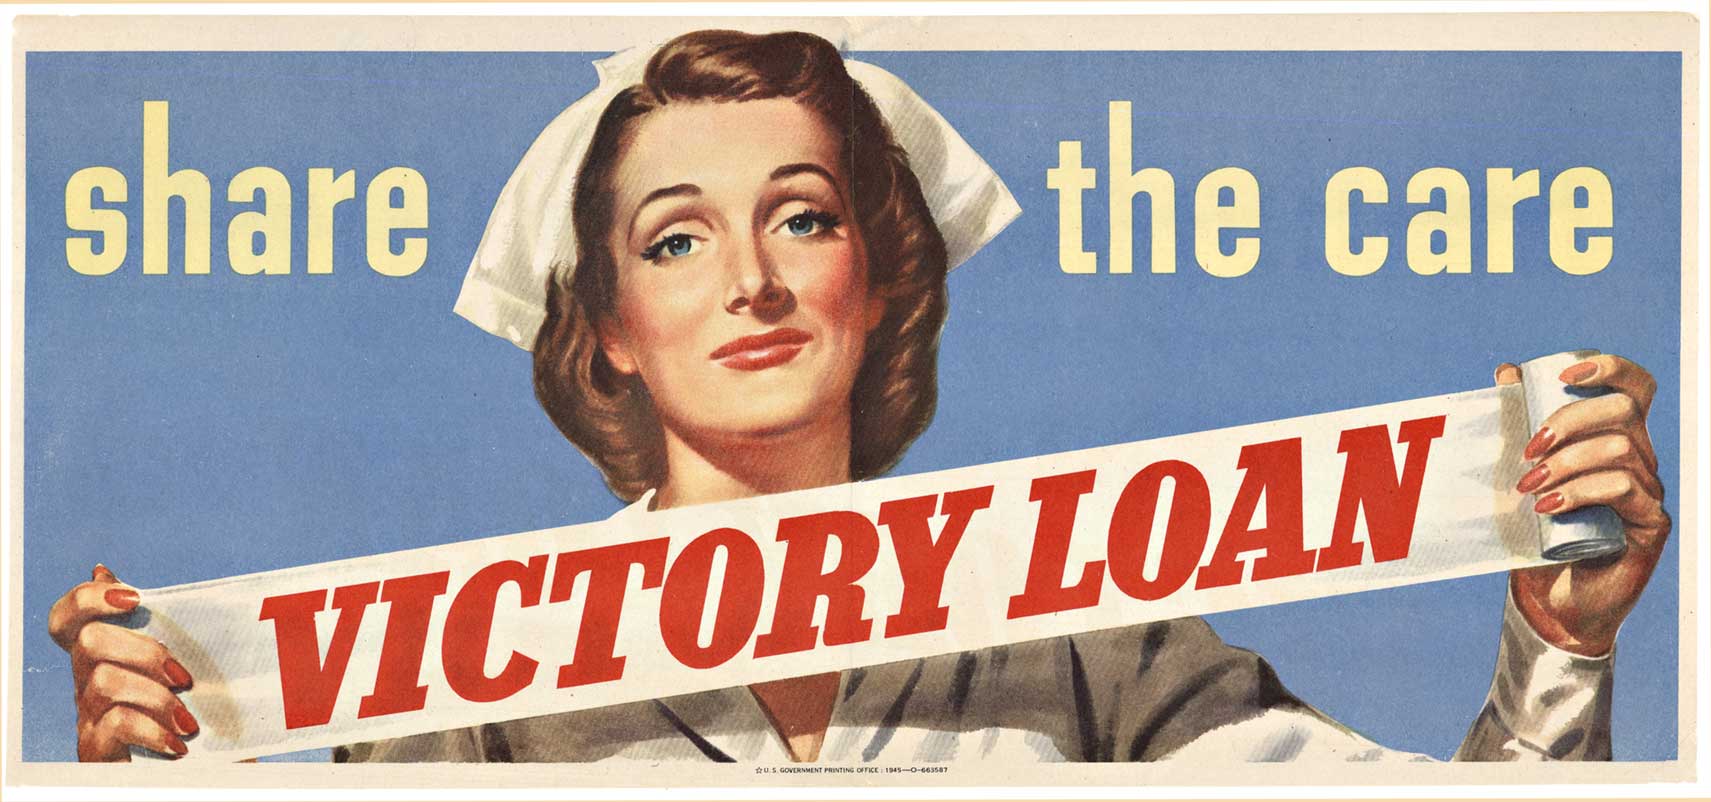 Share the Care - Victory Loan Nurse